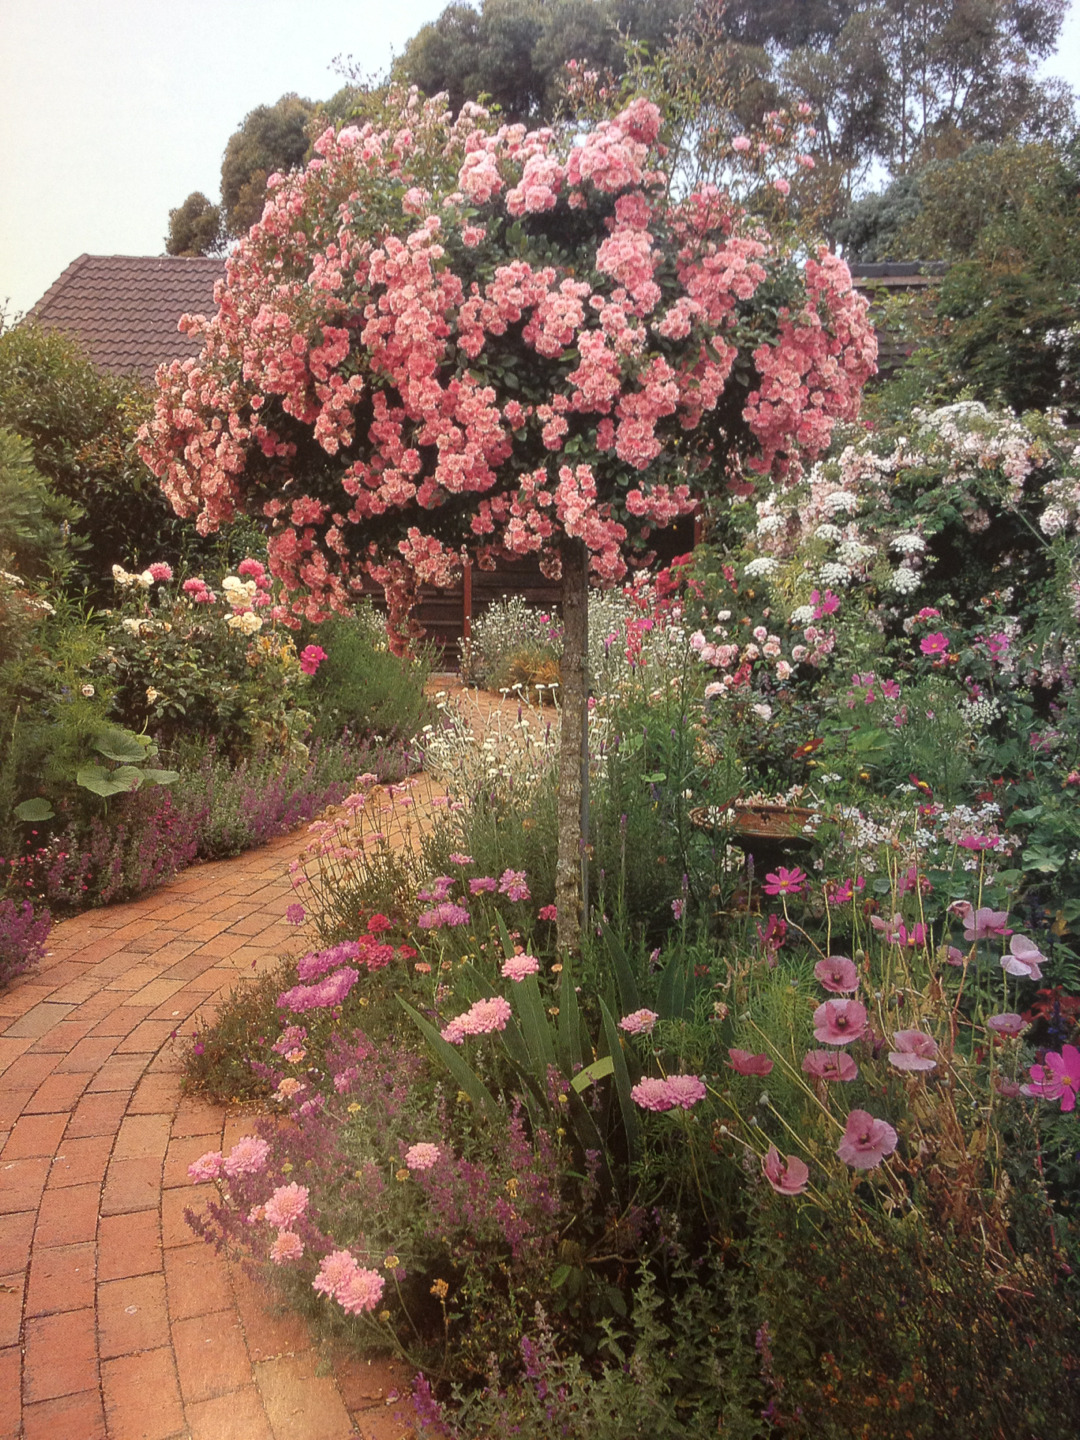 andantegrazioso: Songe d’un jardin de roses